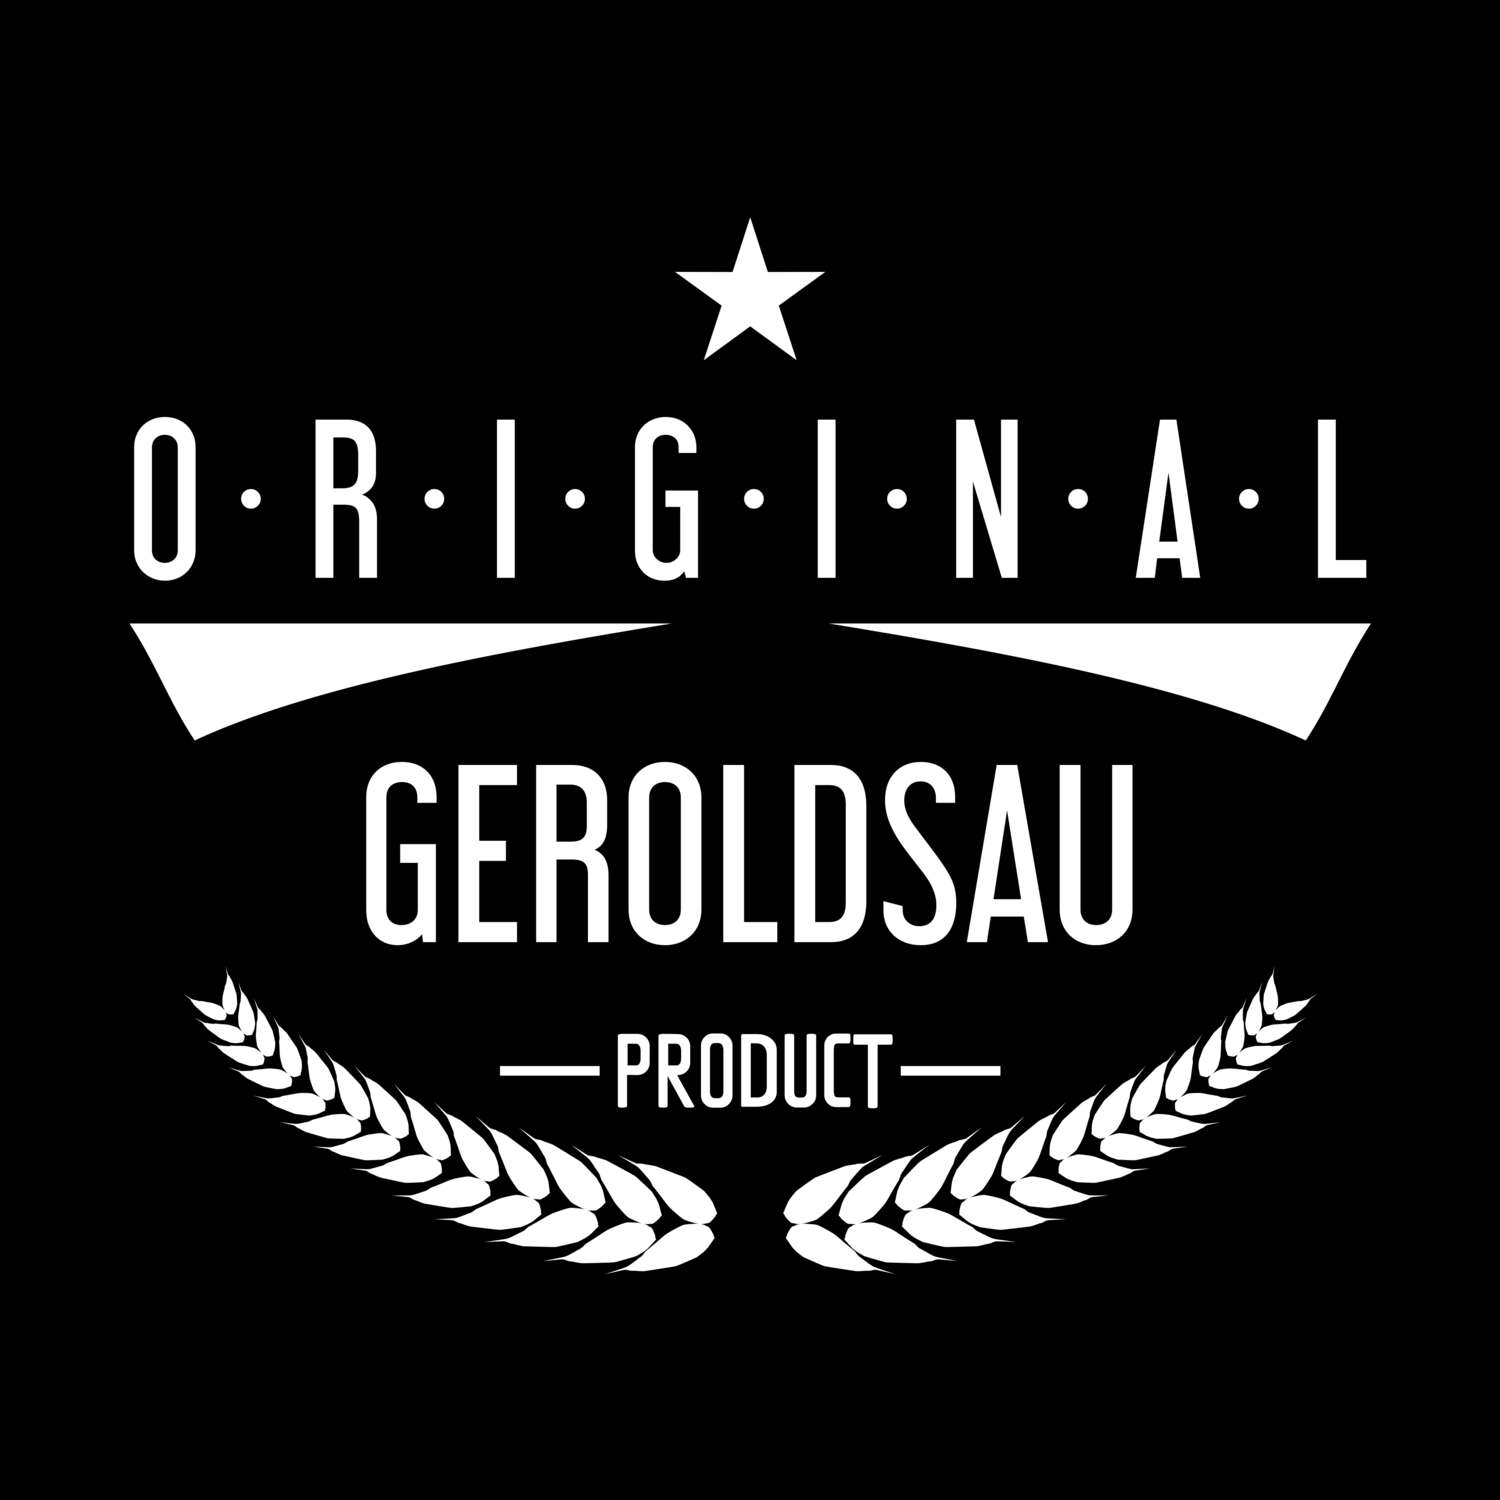 Geroldsau T-Shirt »Original Product«